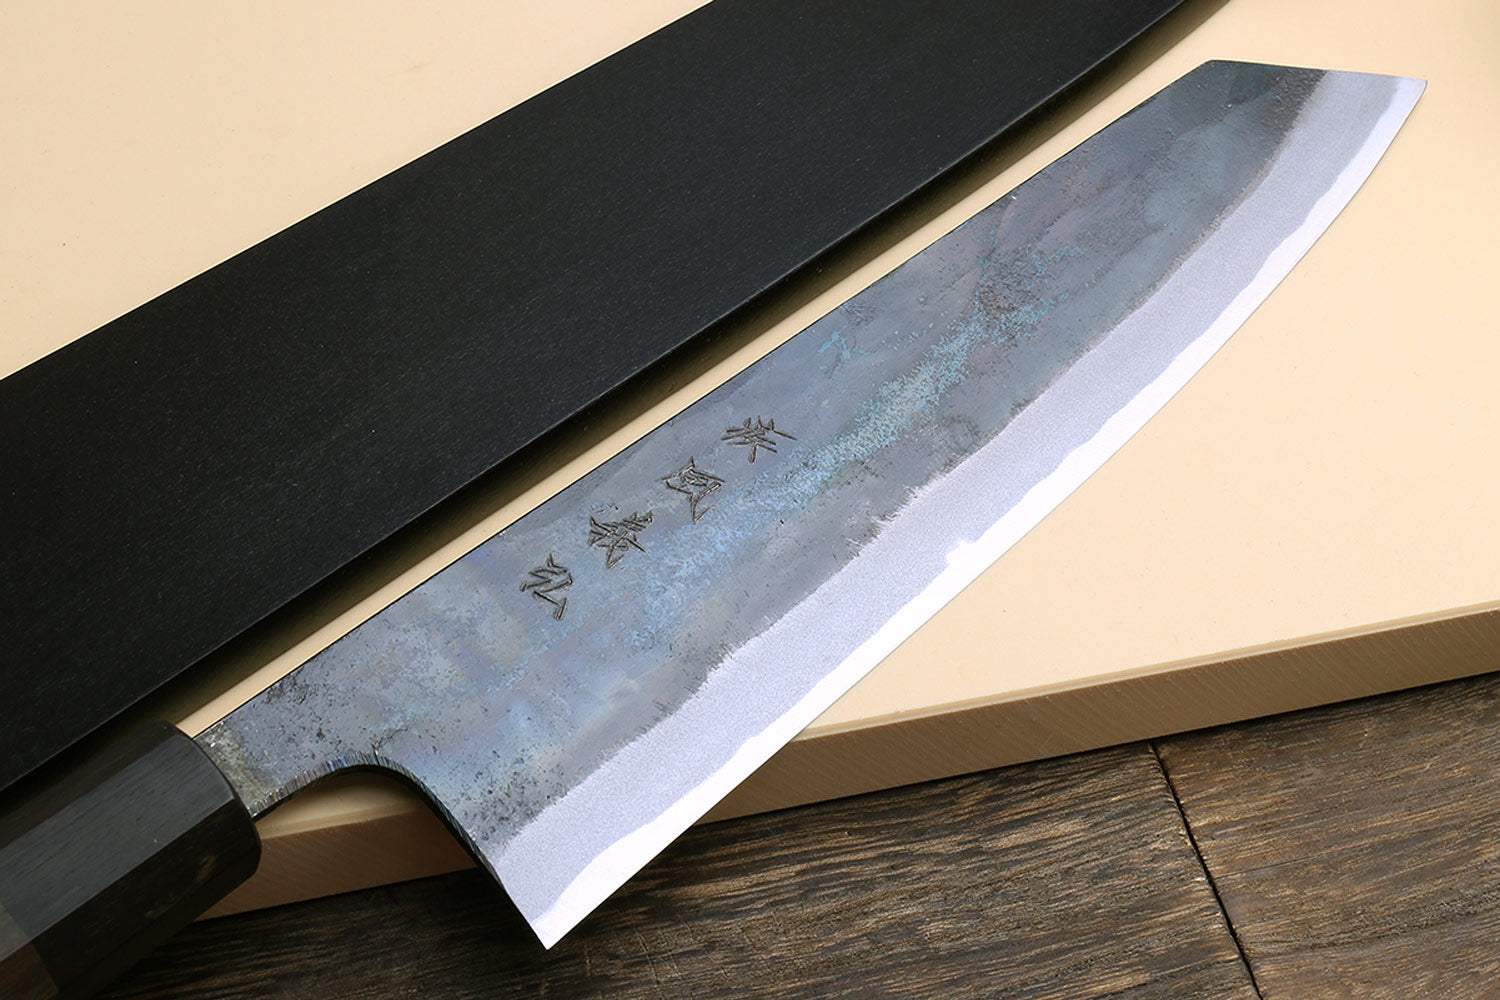 GOKADEN SUPER BLUE STEEL KIRITSUKE CHEF'S KNIFE-KUROUCHI FINISH – HITACHIYA  USA